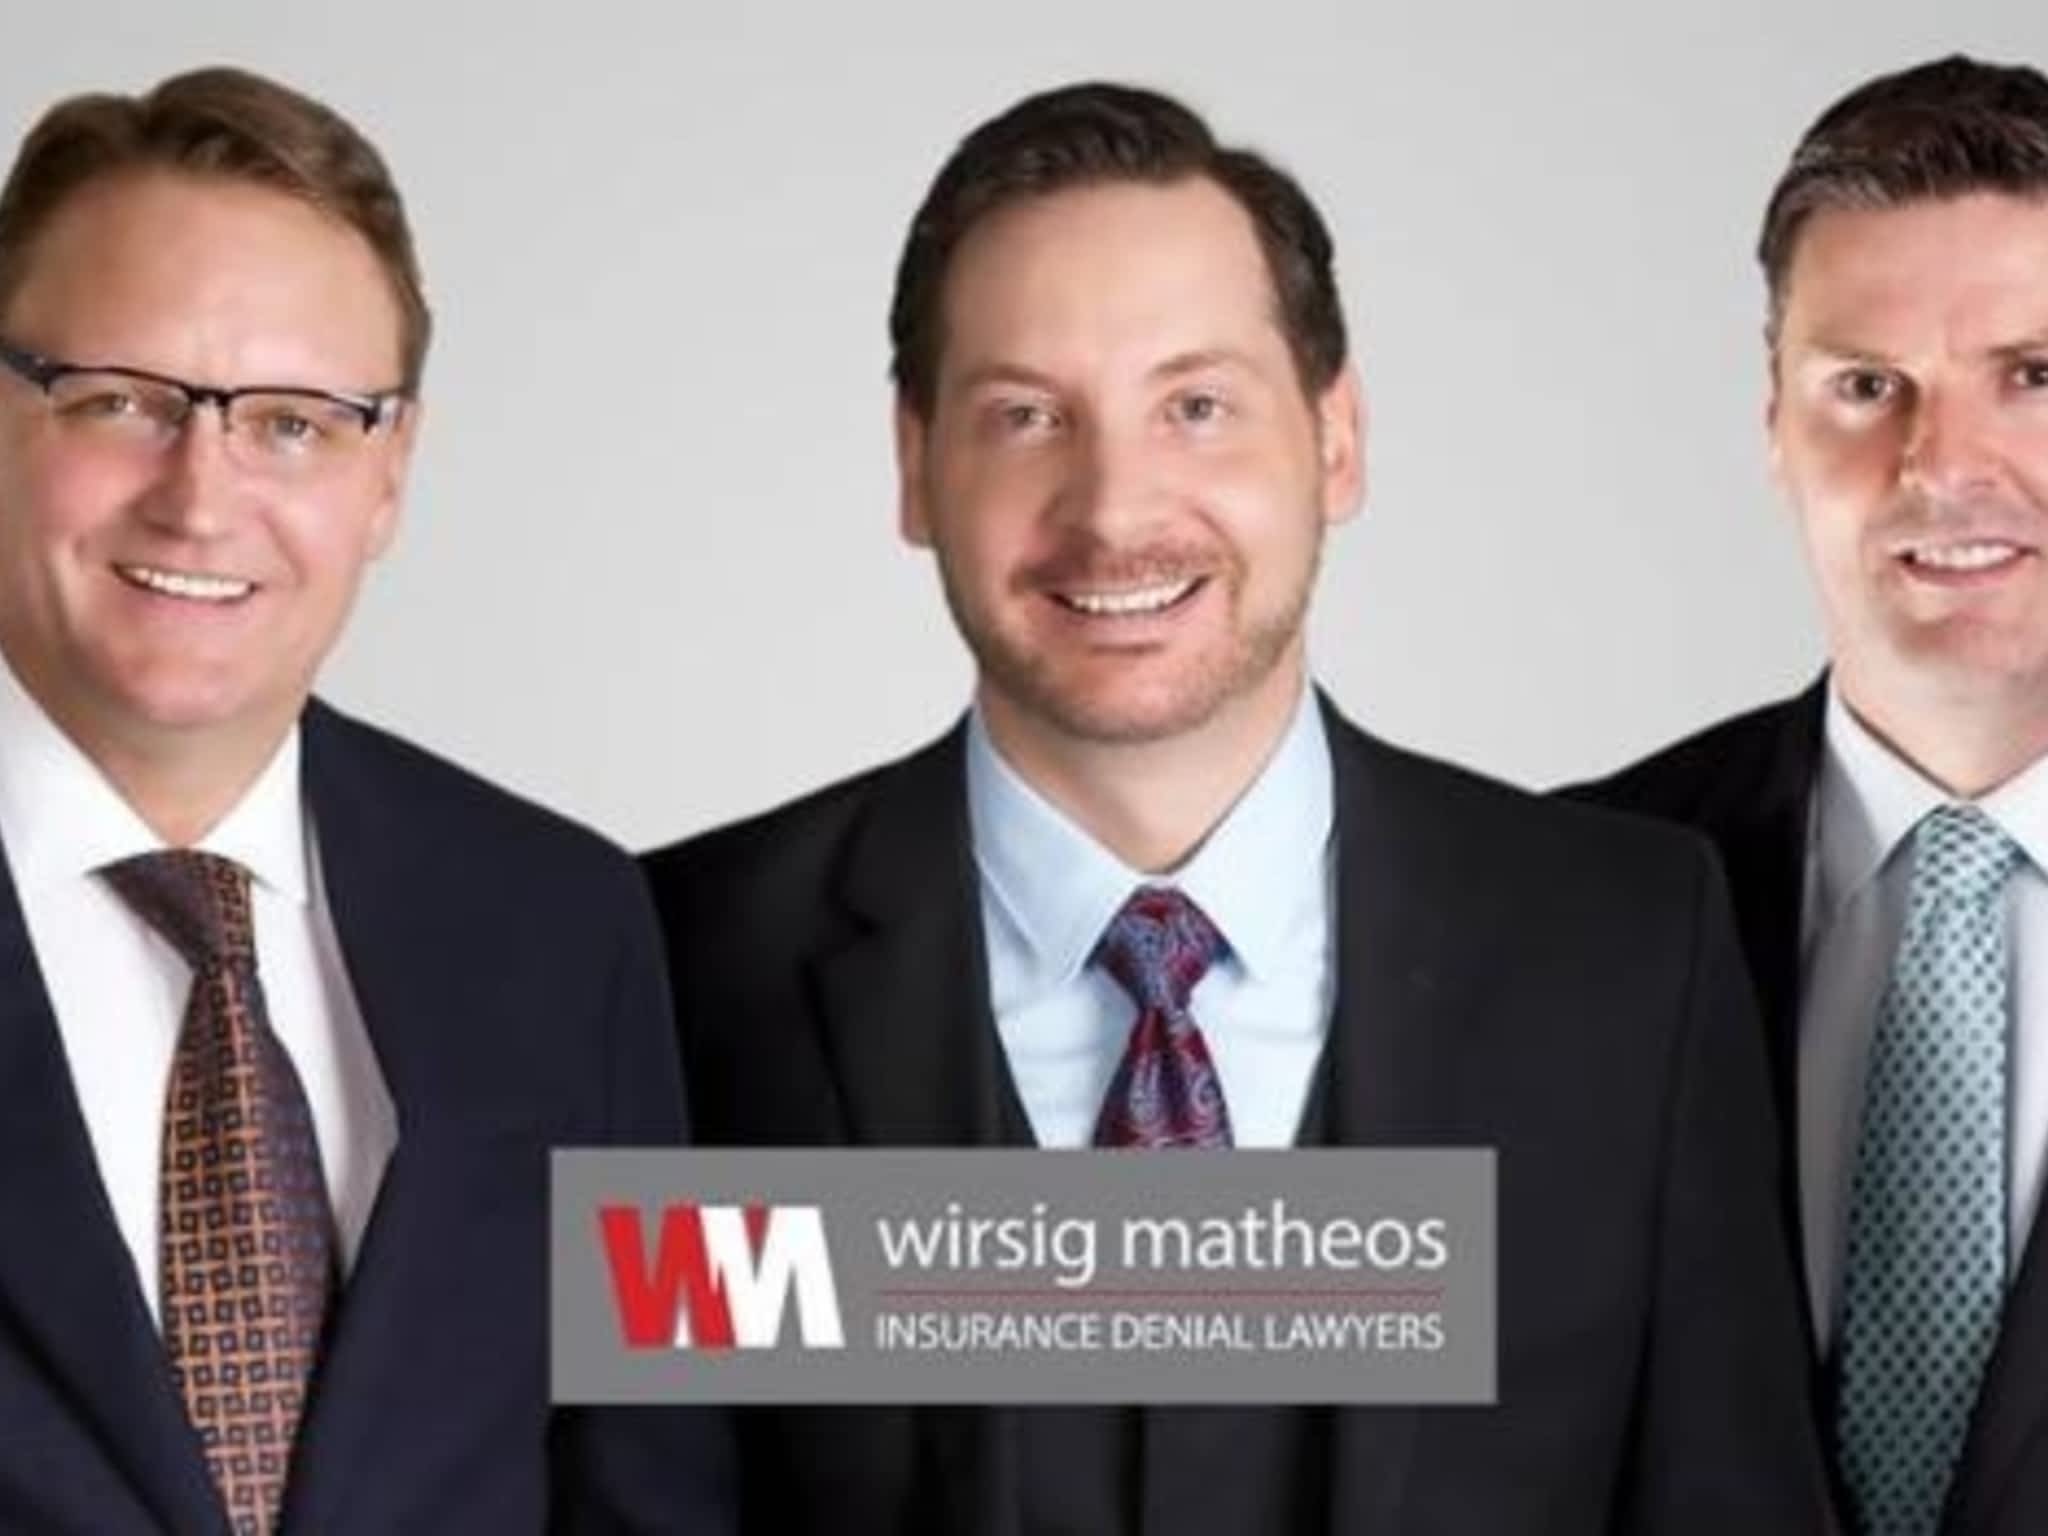 photo Wirsig Matheos Insurance Denial Lawyers